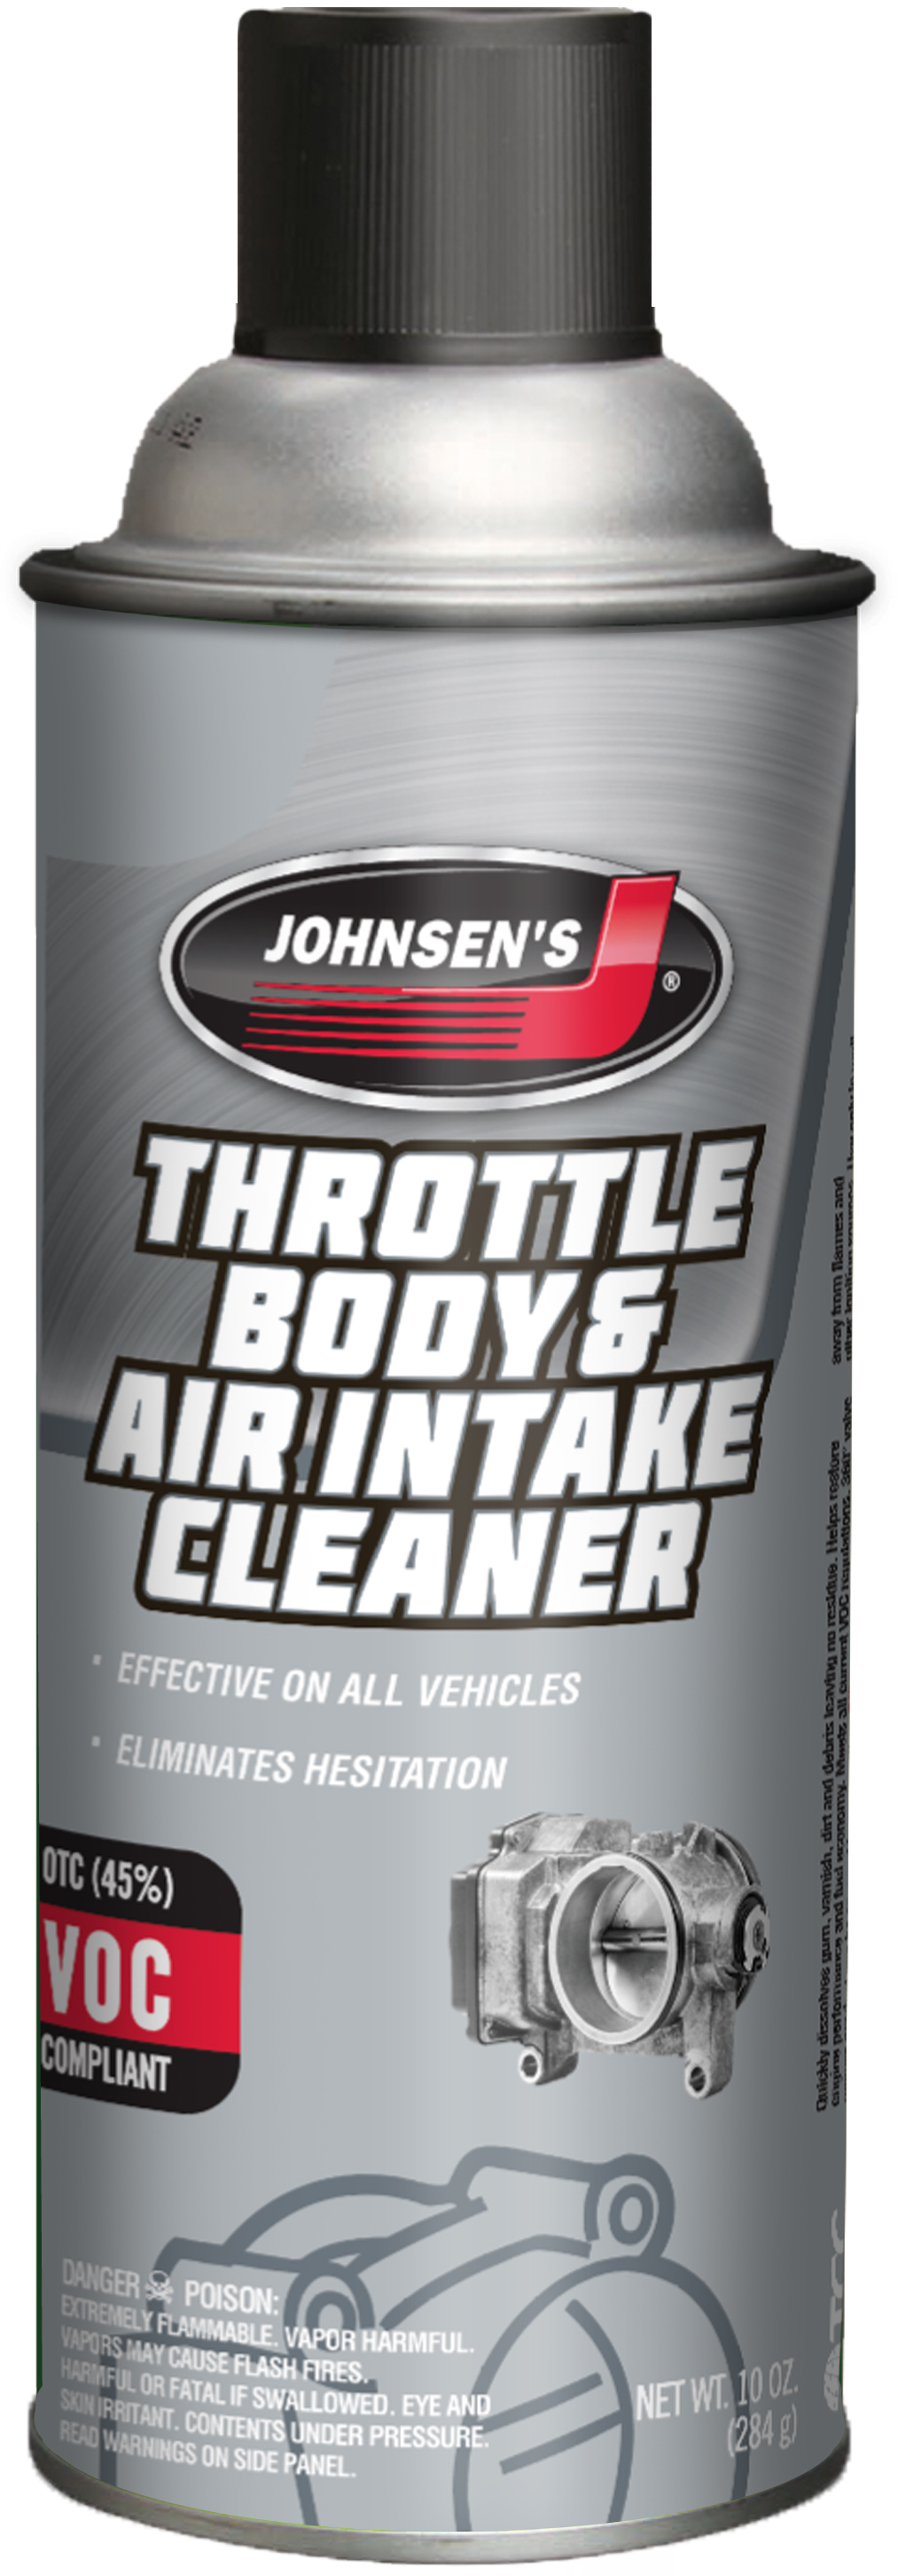 Johnsen's 10oz Throttle Body & Air Intake Cleaner (Otc / 45% Compliant) 4724